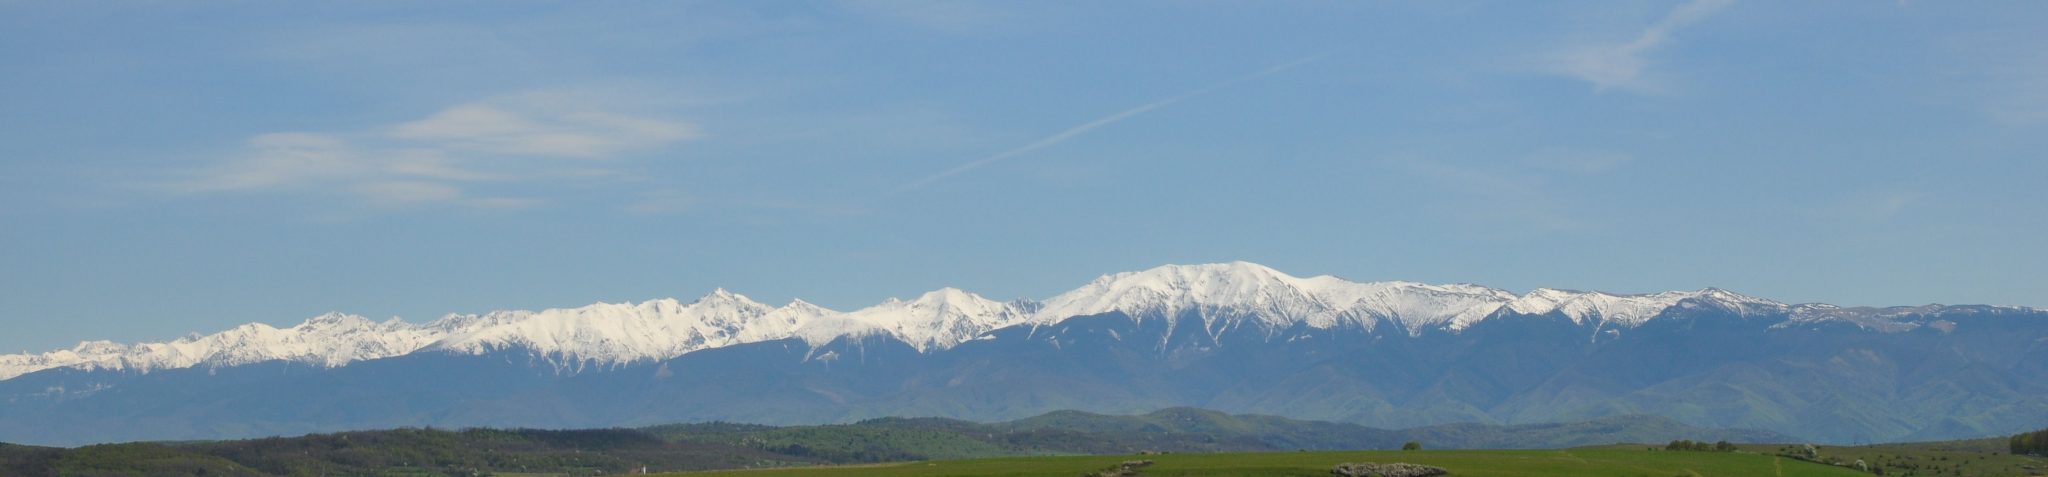 Giant Ski Area Proposed For Romania